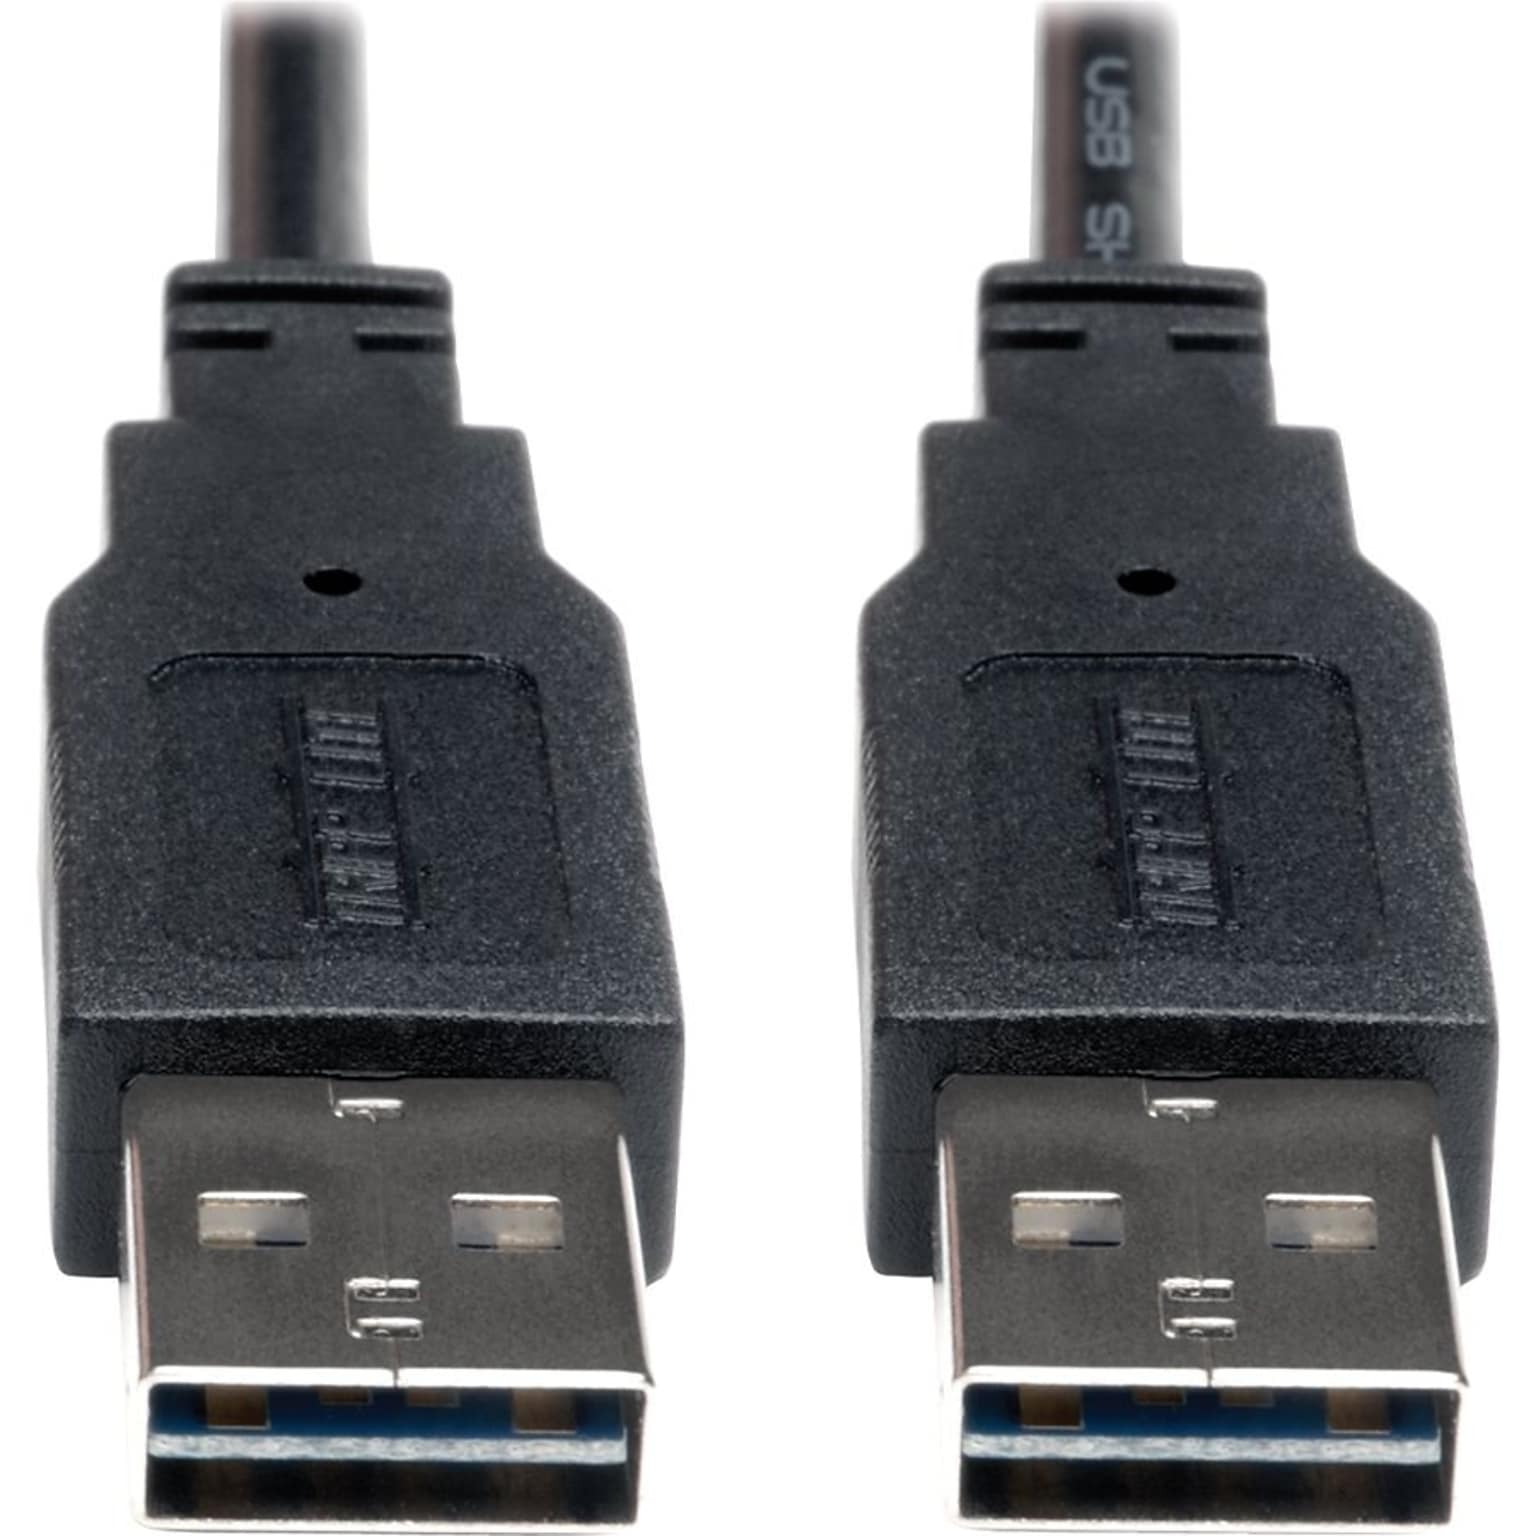 Tripp Lite Universal Reversible 6 USB 2.0 A/A Male USB Cable; Black